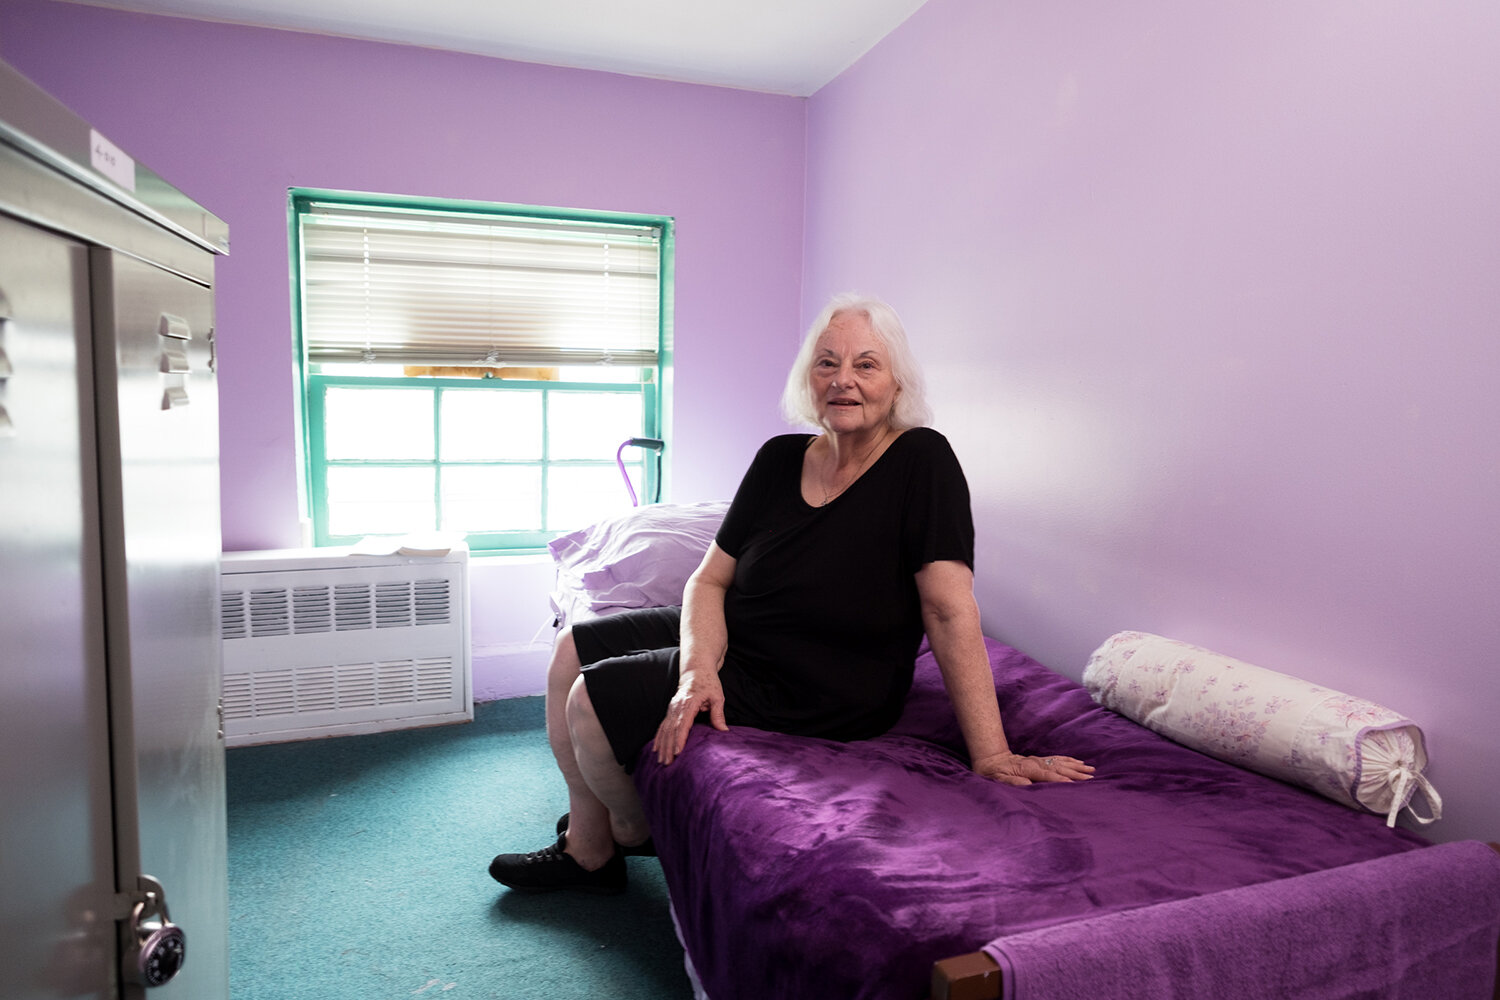  Karen, 69, in a homeless shelter four weeks after her release. East Village, NY, 2017. Image © Sara Bennett. 